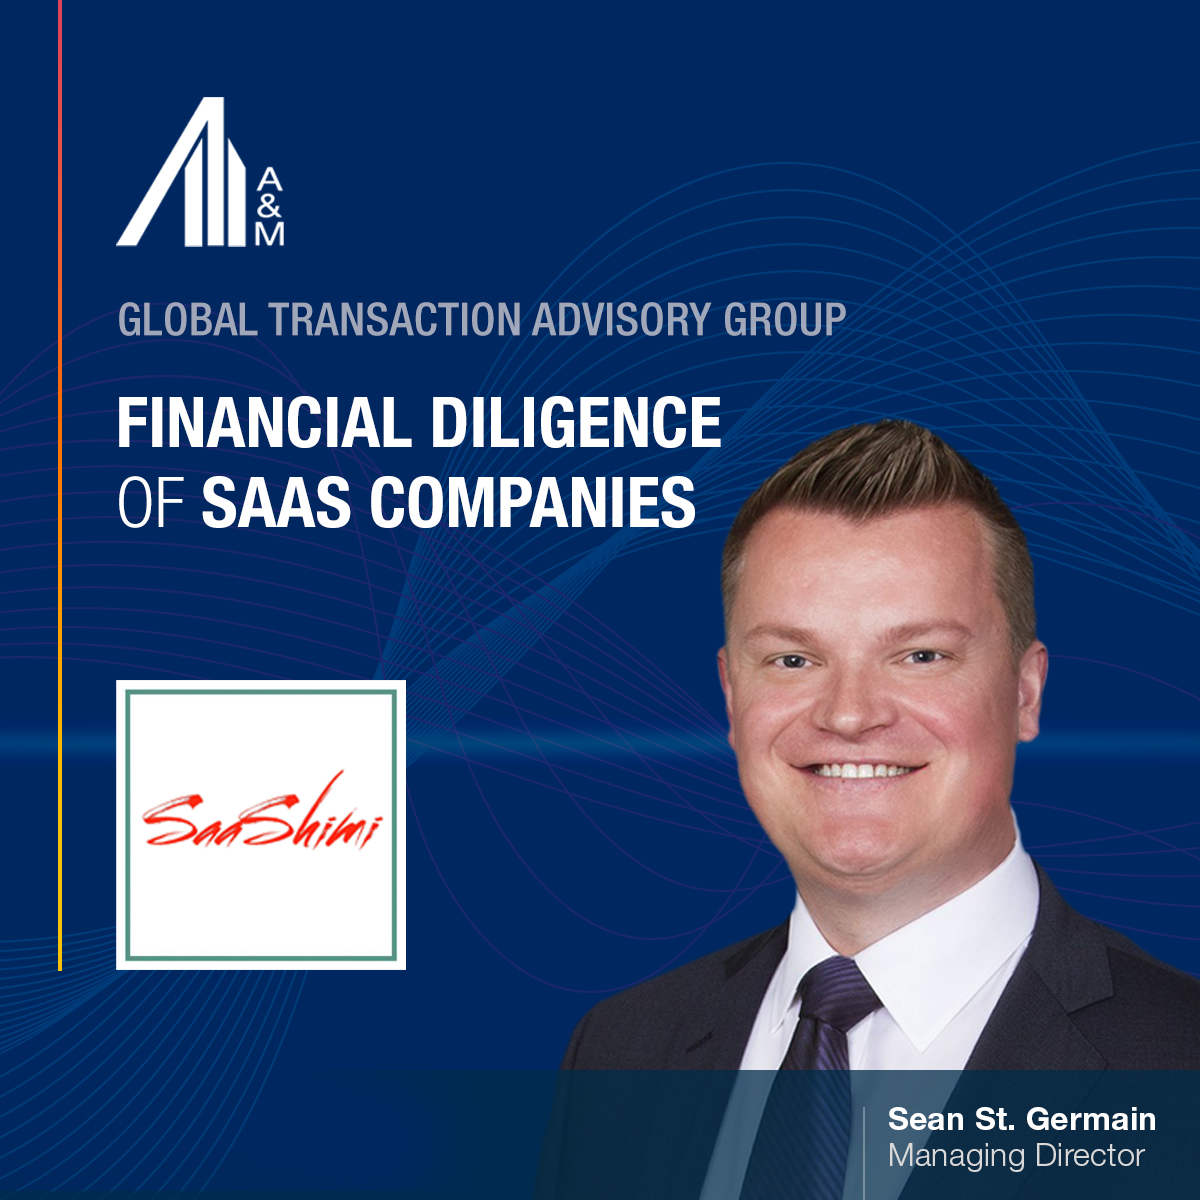 Financial Diligence of SaaS Companies